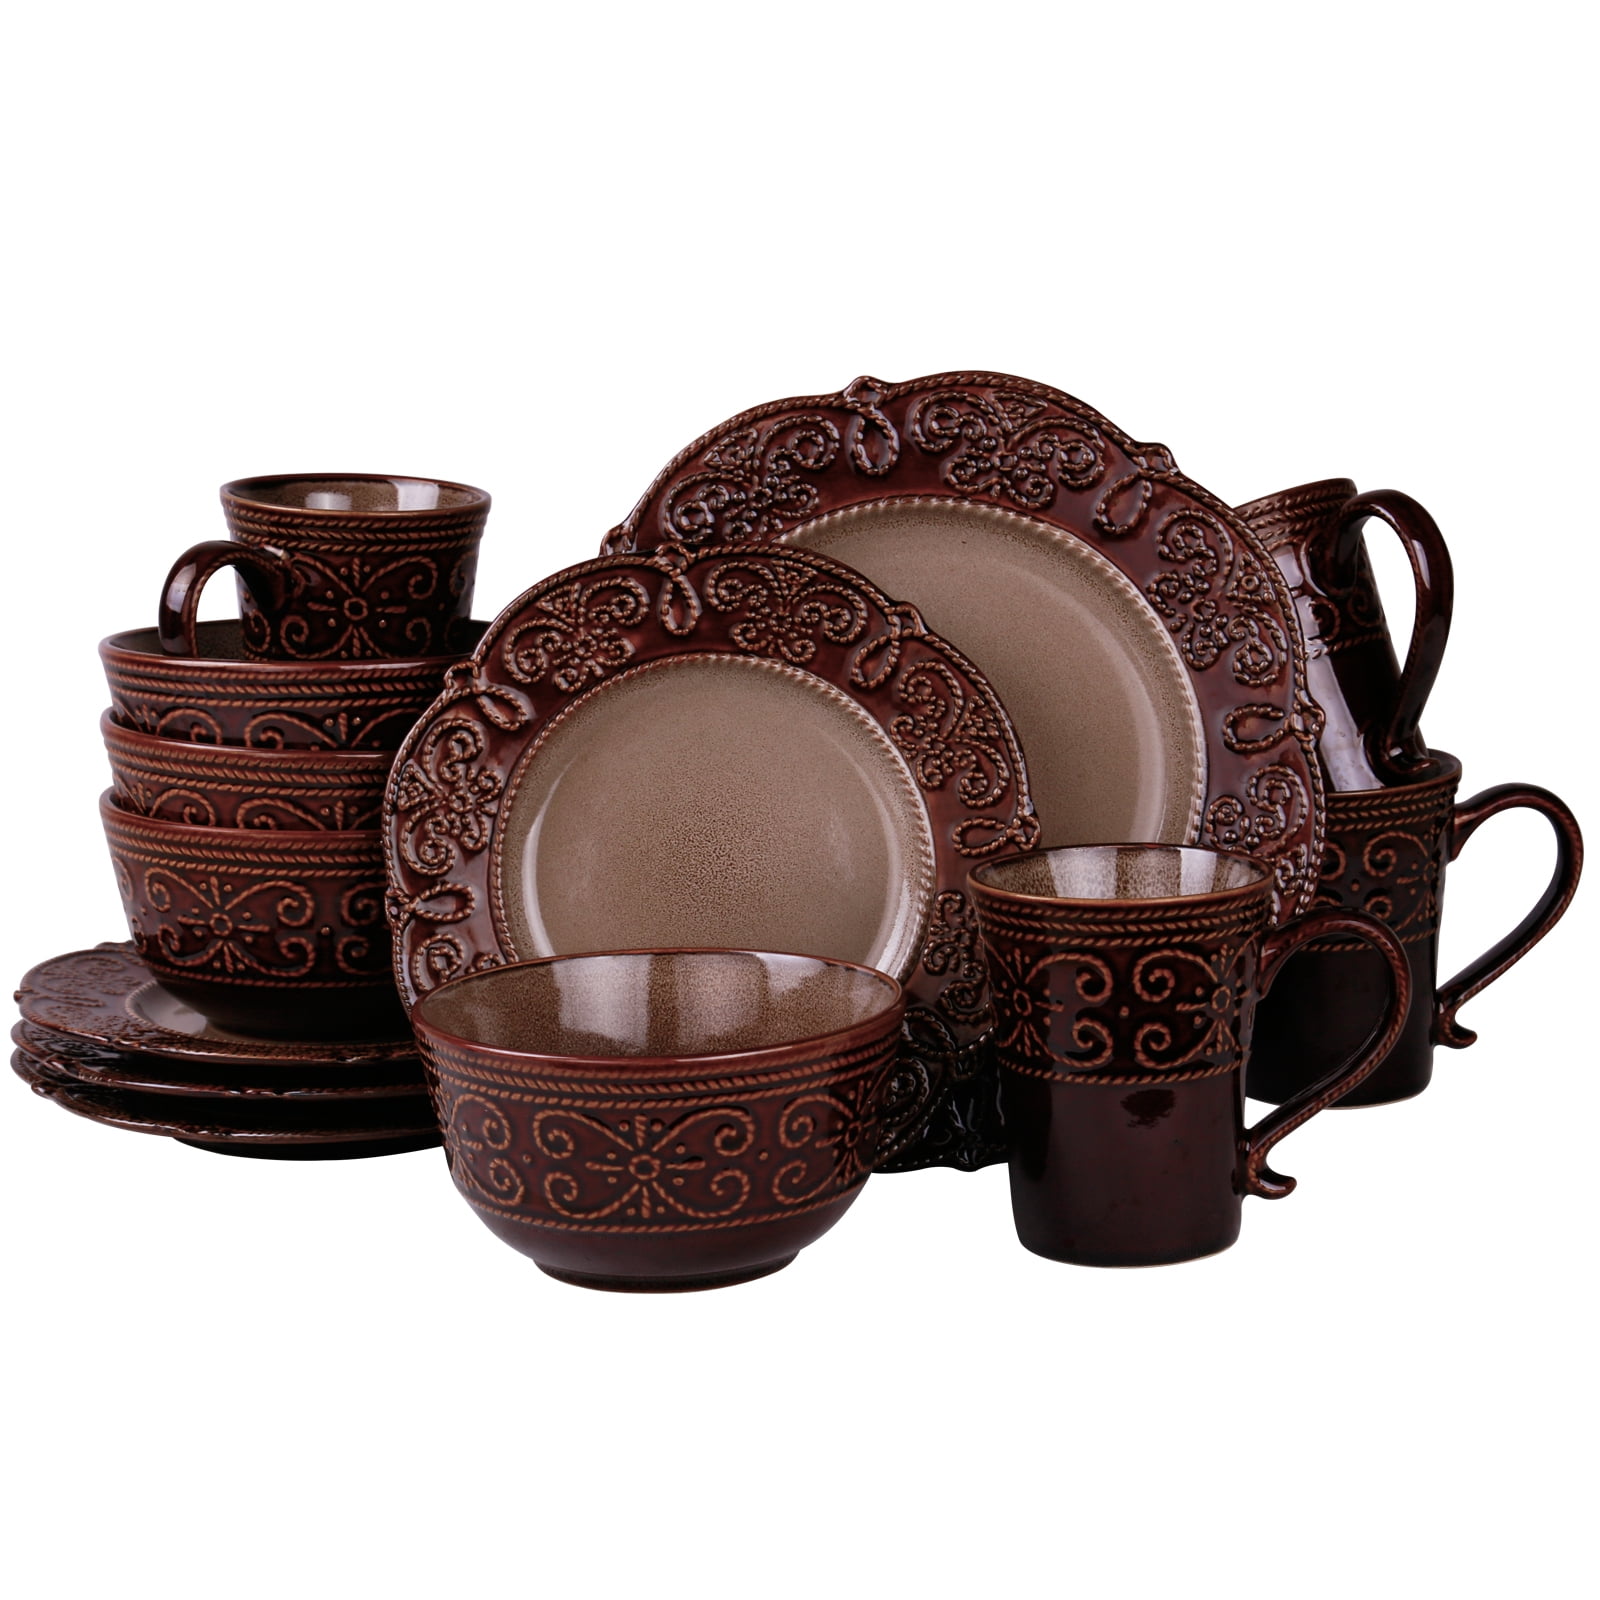 Elama Salia 16 Piece Textures Stoneware Dinnerware Set